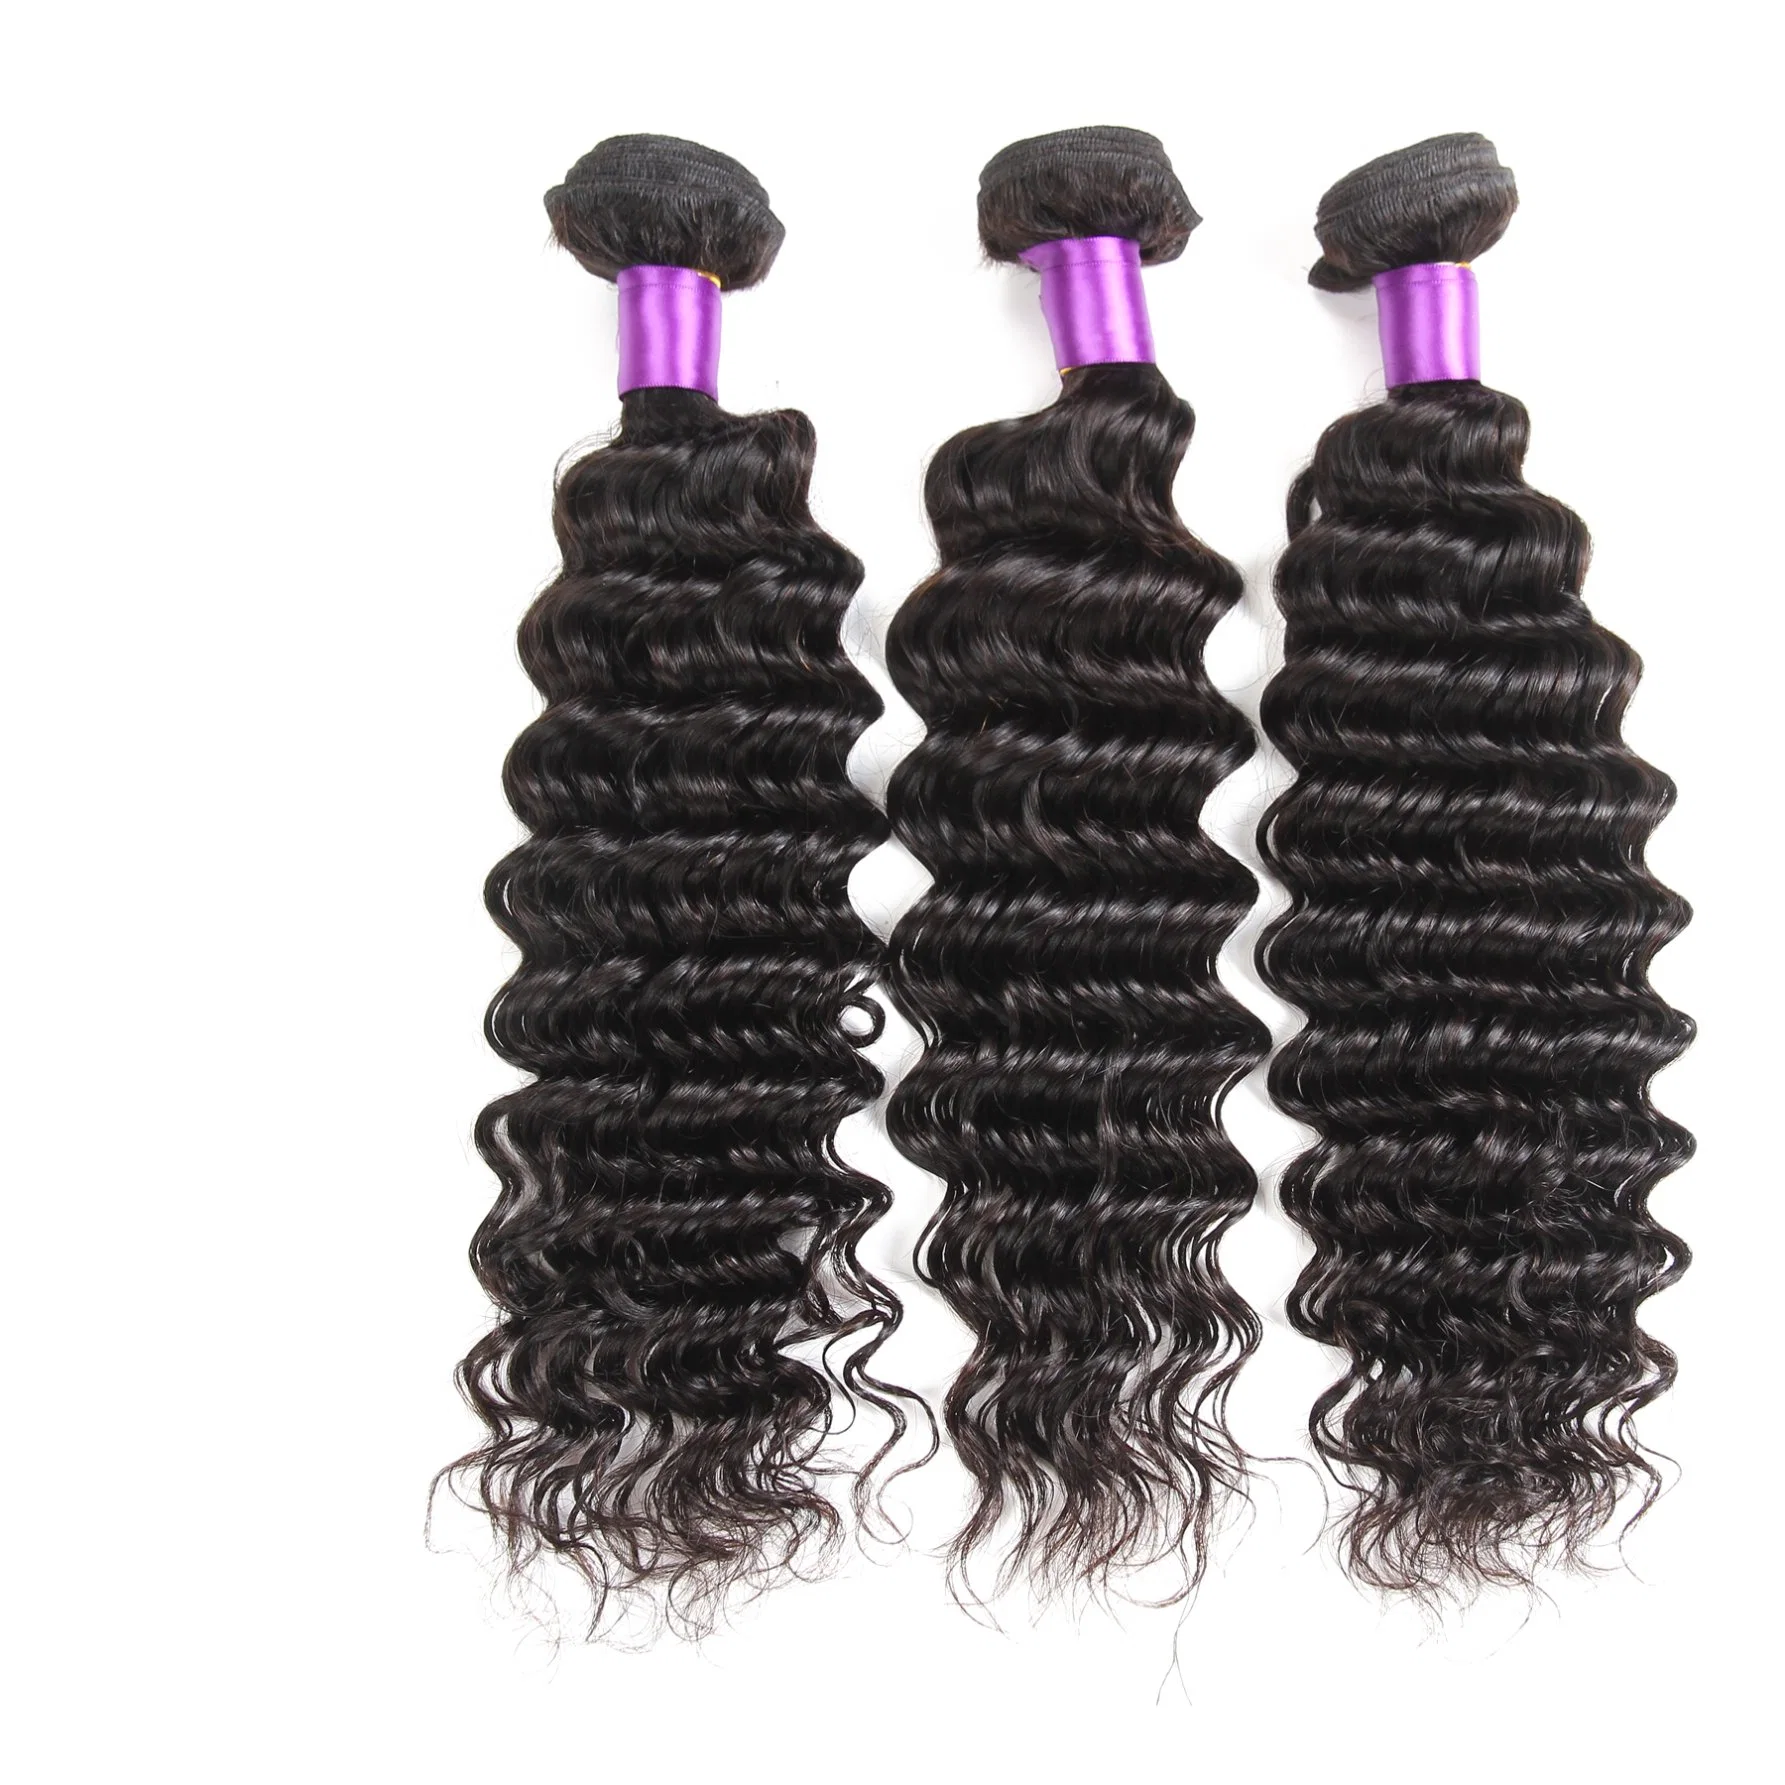 Kbeth Human Hair Weaving Bundles for Black Women Gift 2021 Fashion Weft 100% Virgin Cambodian 10A Wholesale/Supplier Bundle with Closure Vendors